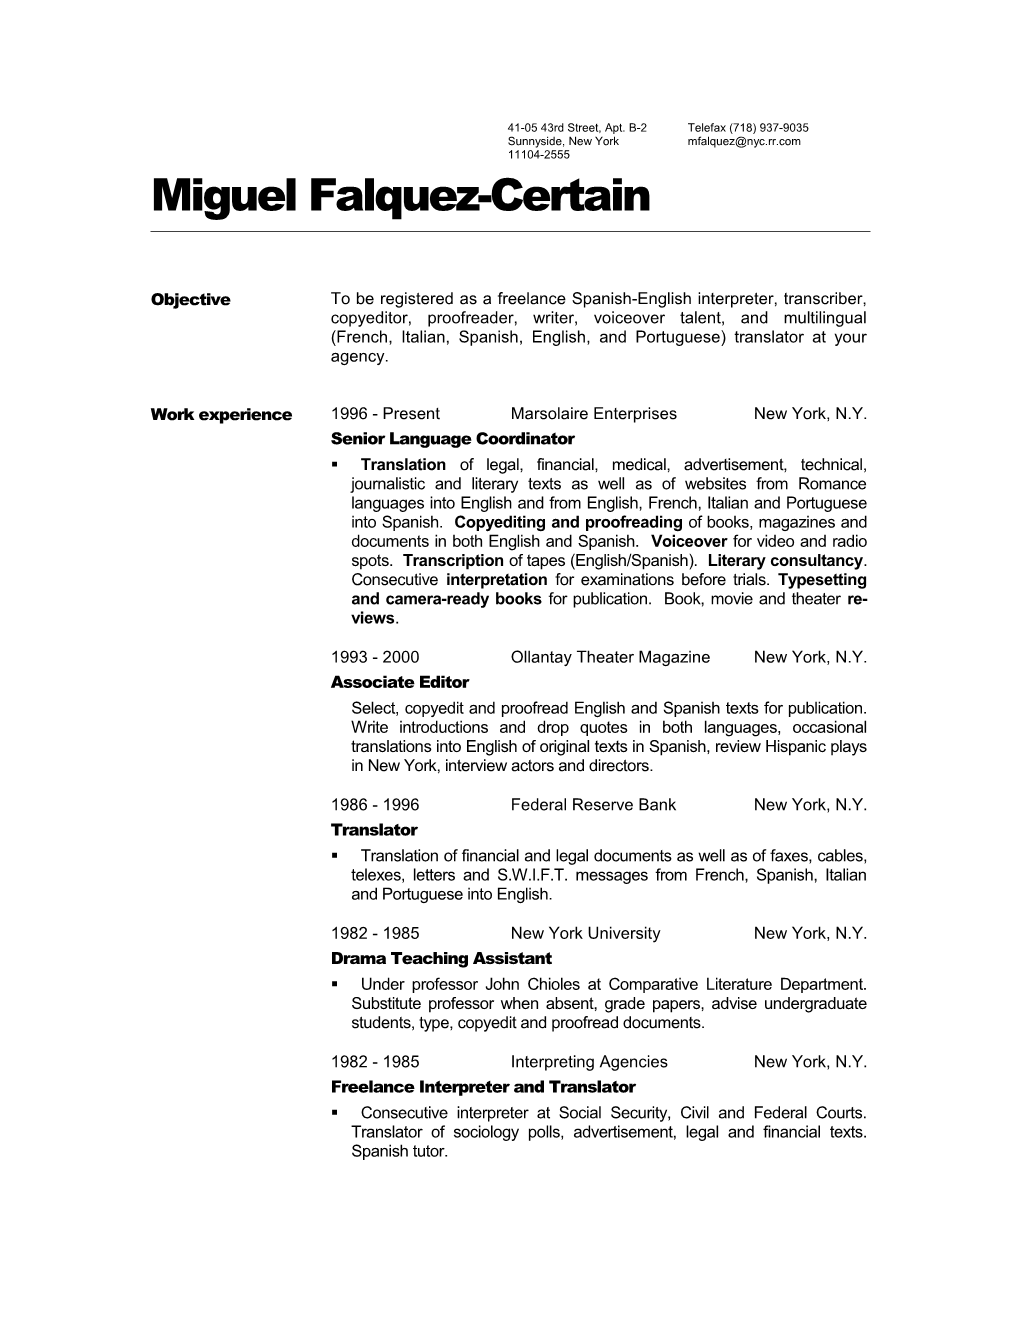 Miguel Falquez-Certain